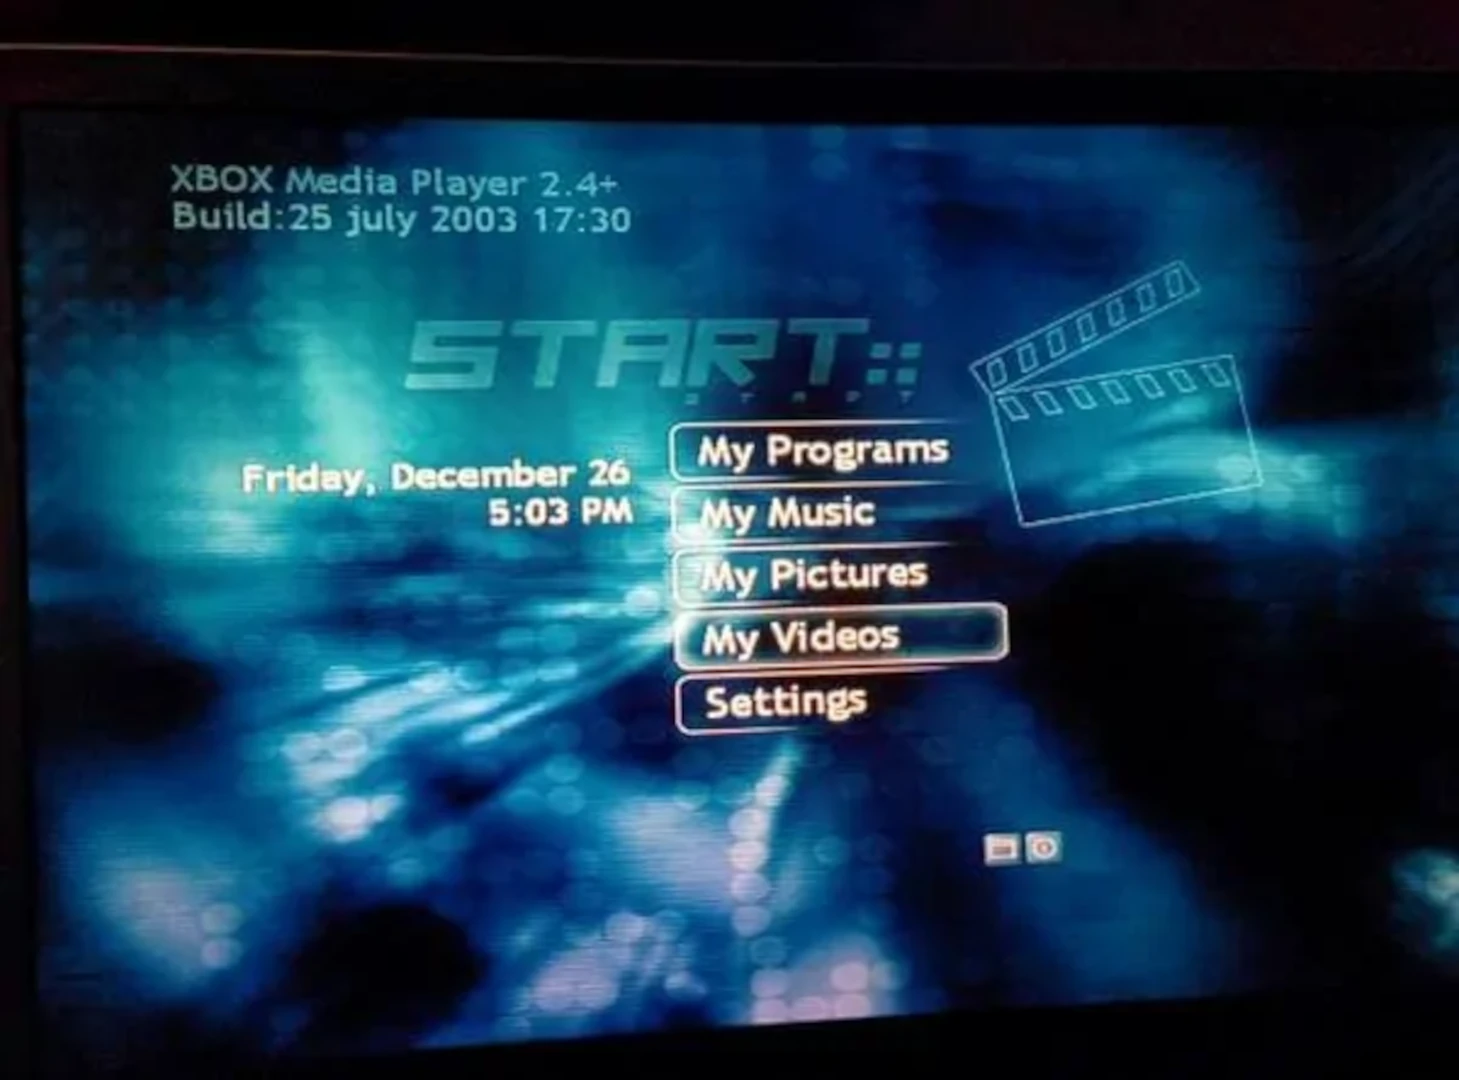 Image of the original XBMP home screen and menu